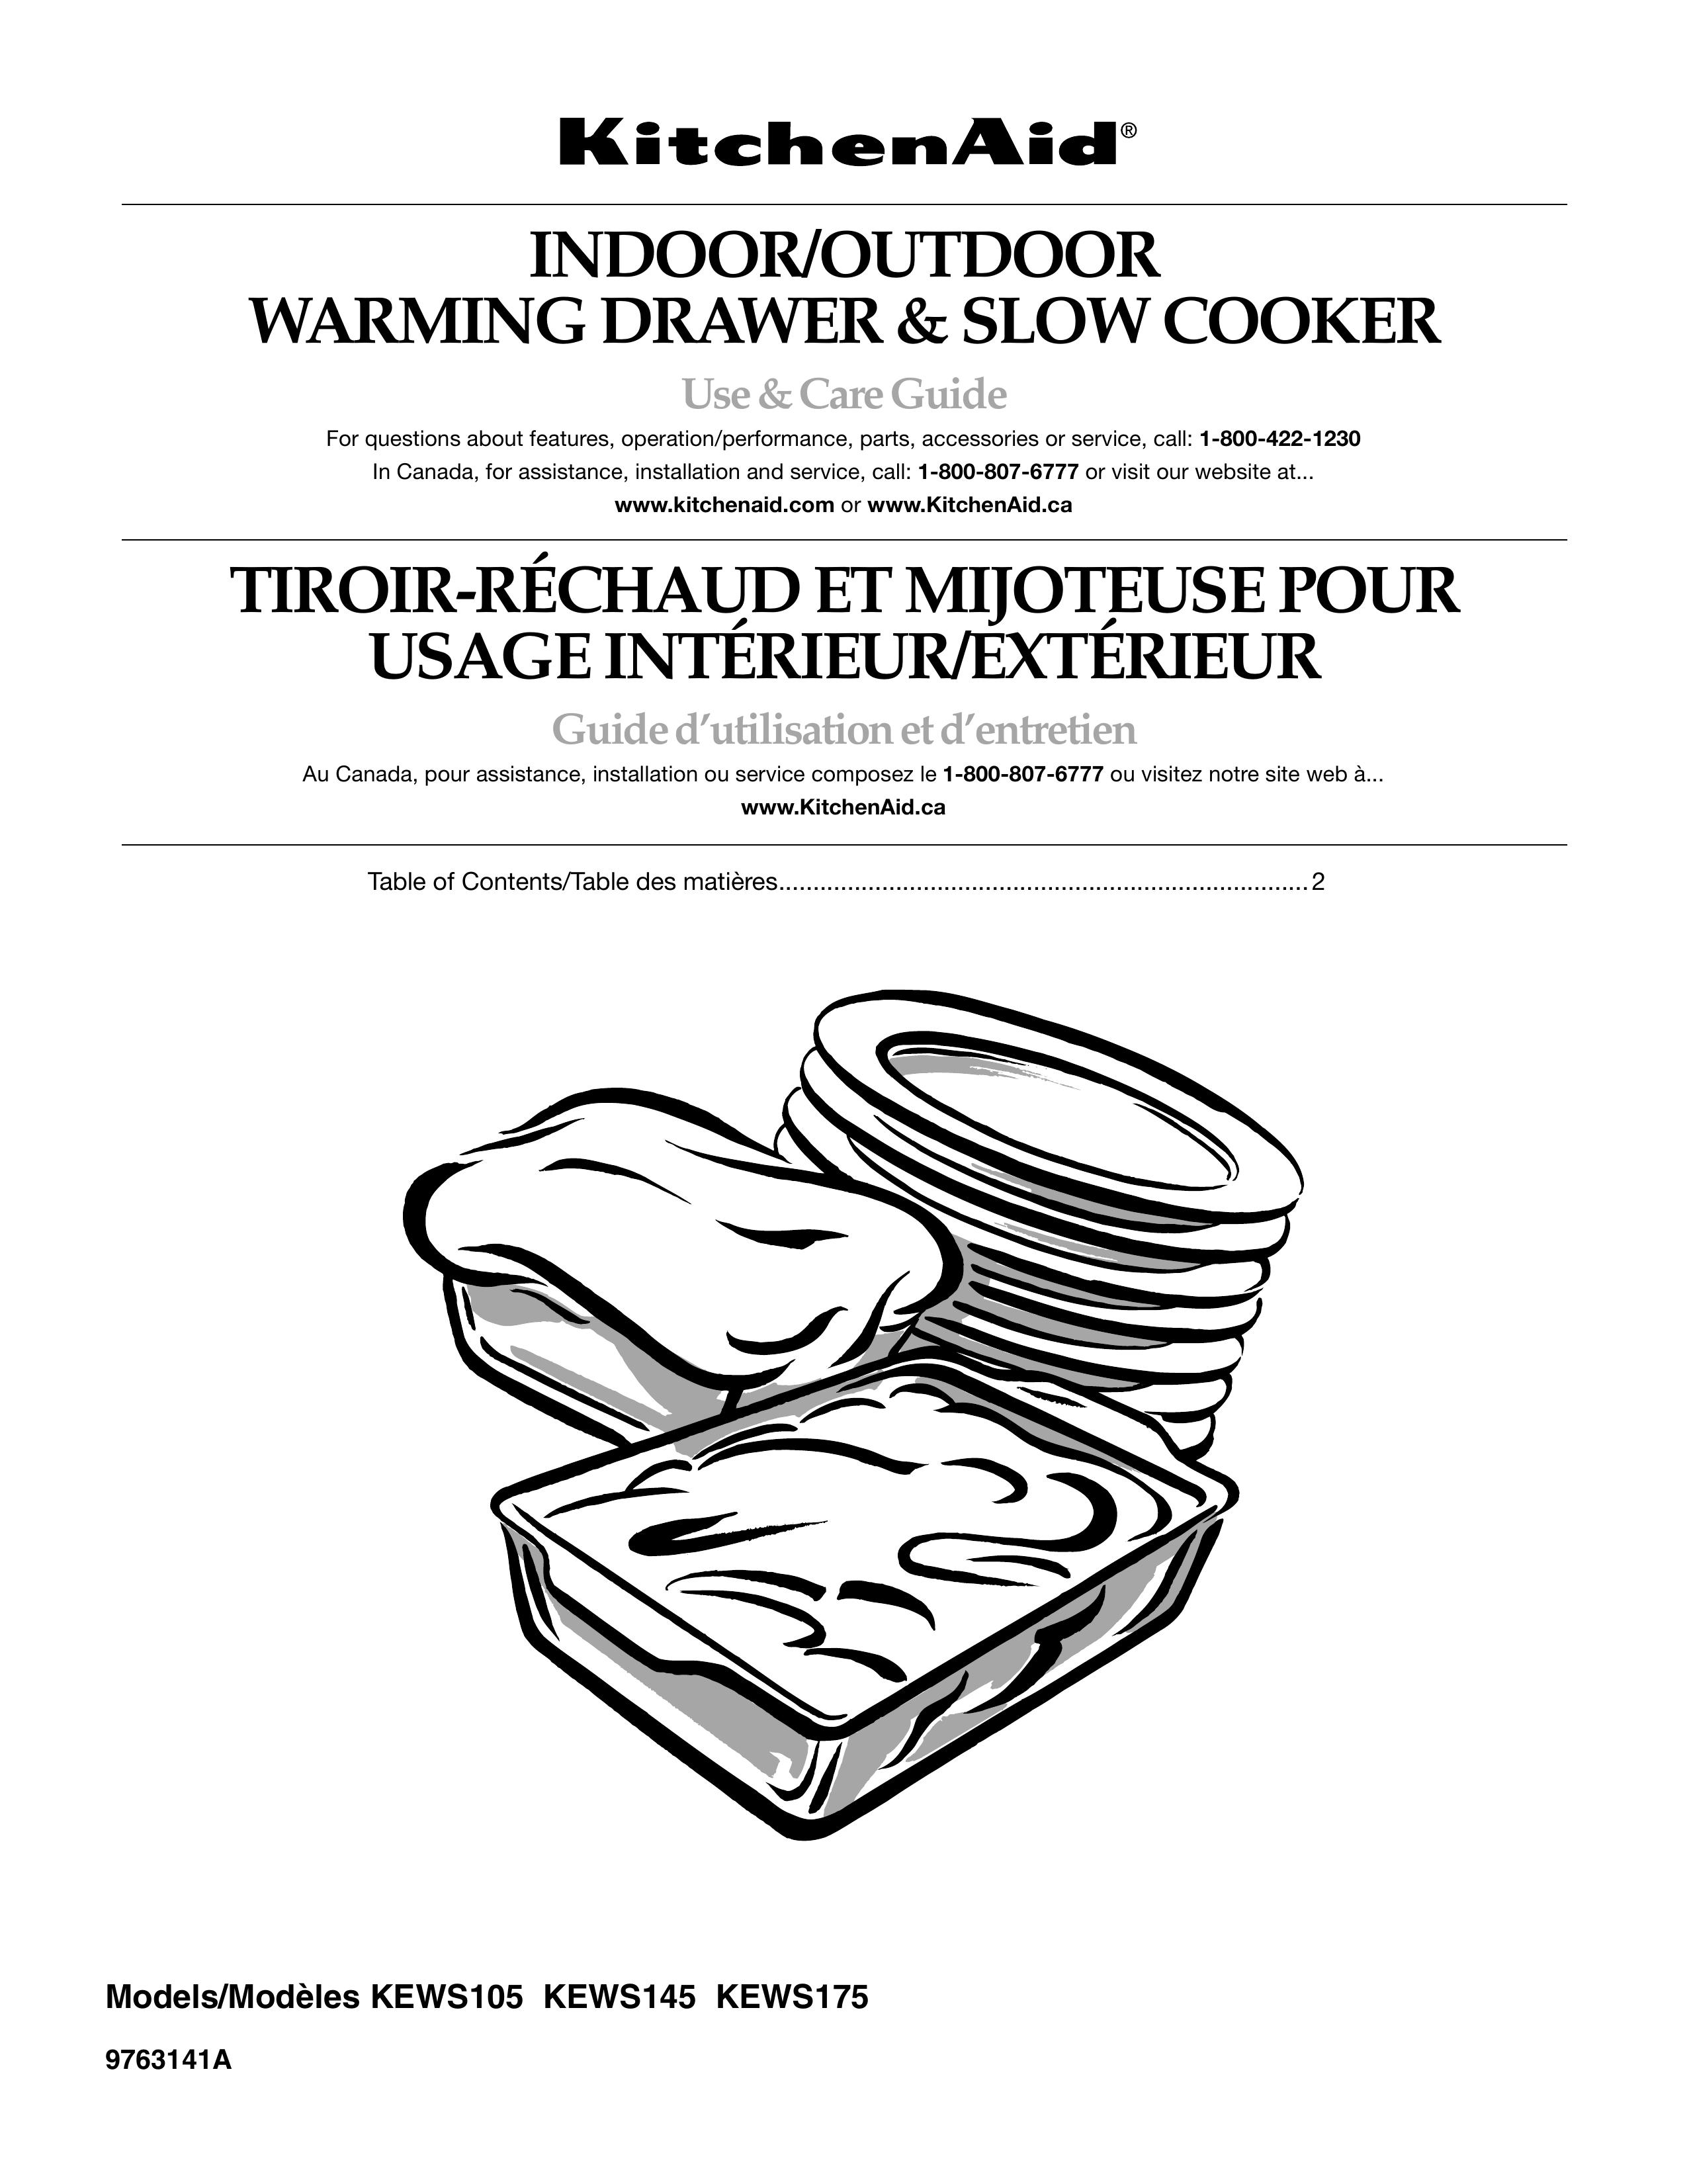 KitchenAid KEWS145 Slow Cooker User Manual